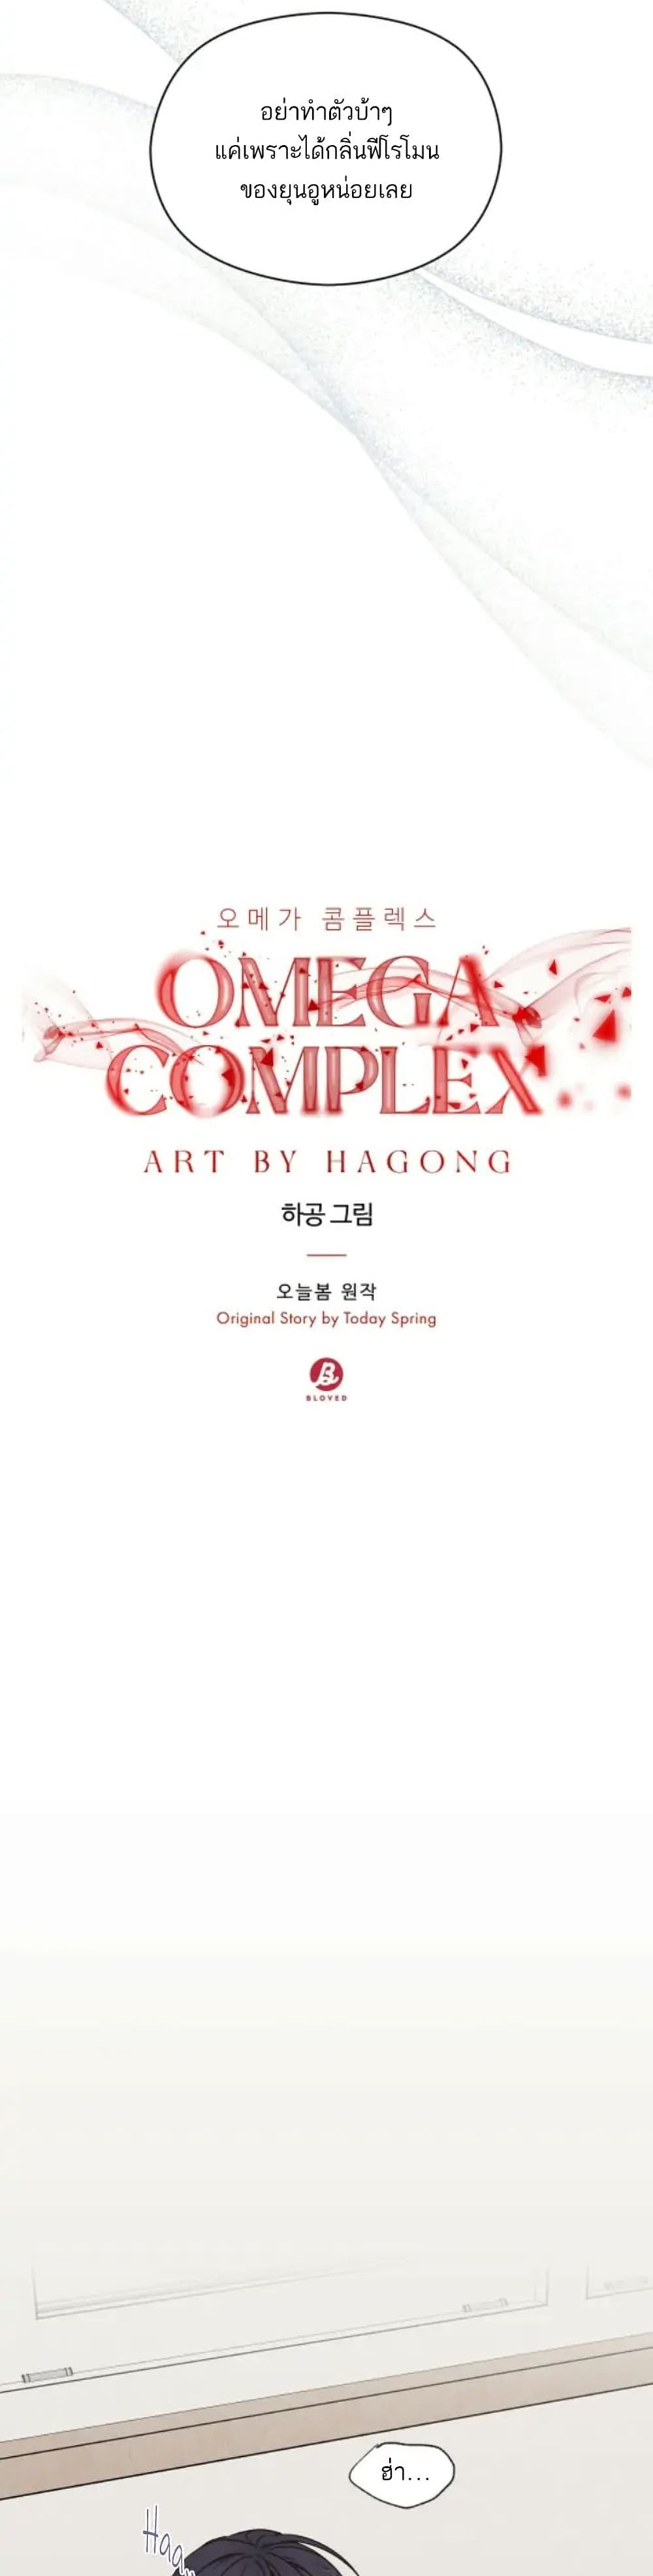 Omega Complex 18-18